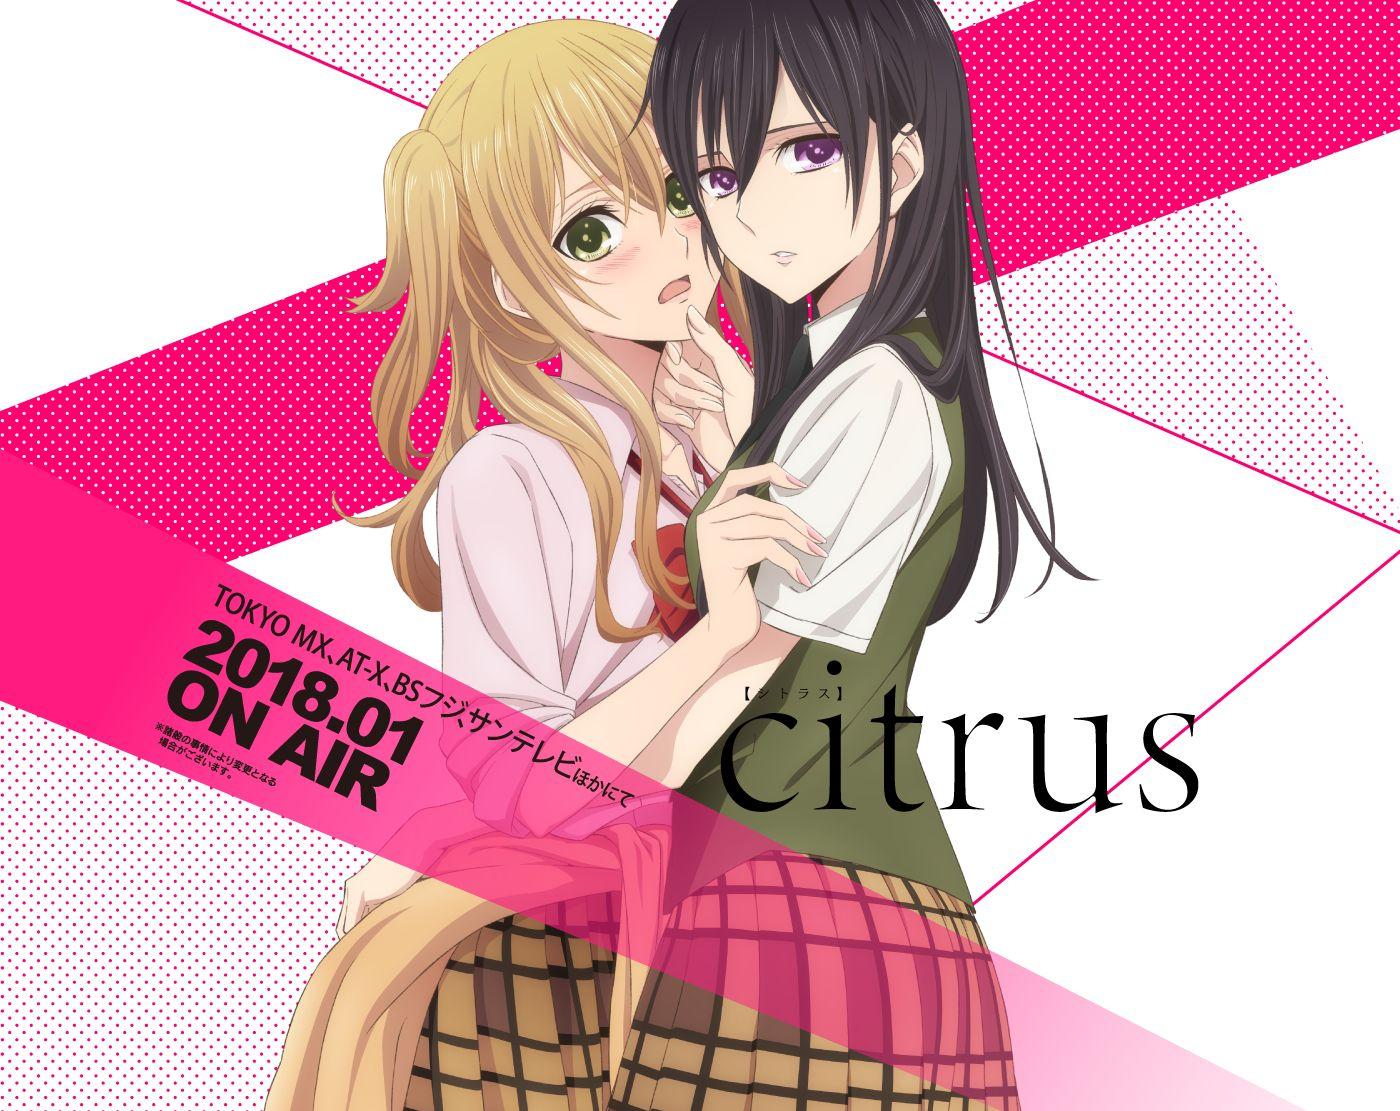 Citrus (Manga) Anime Image Board